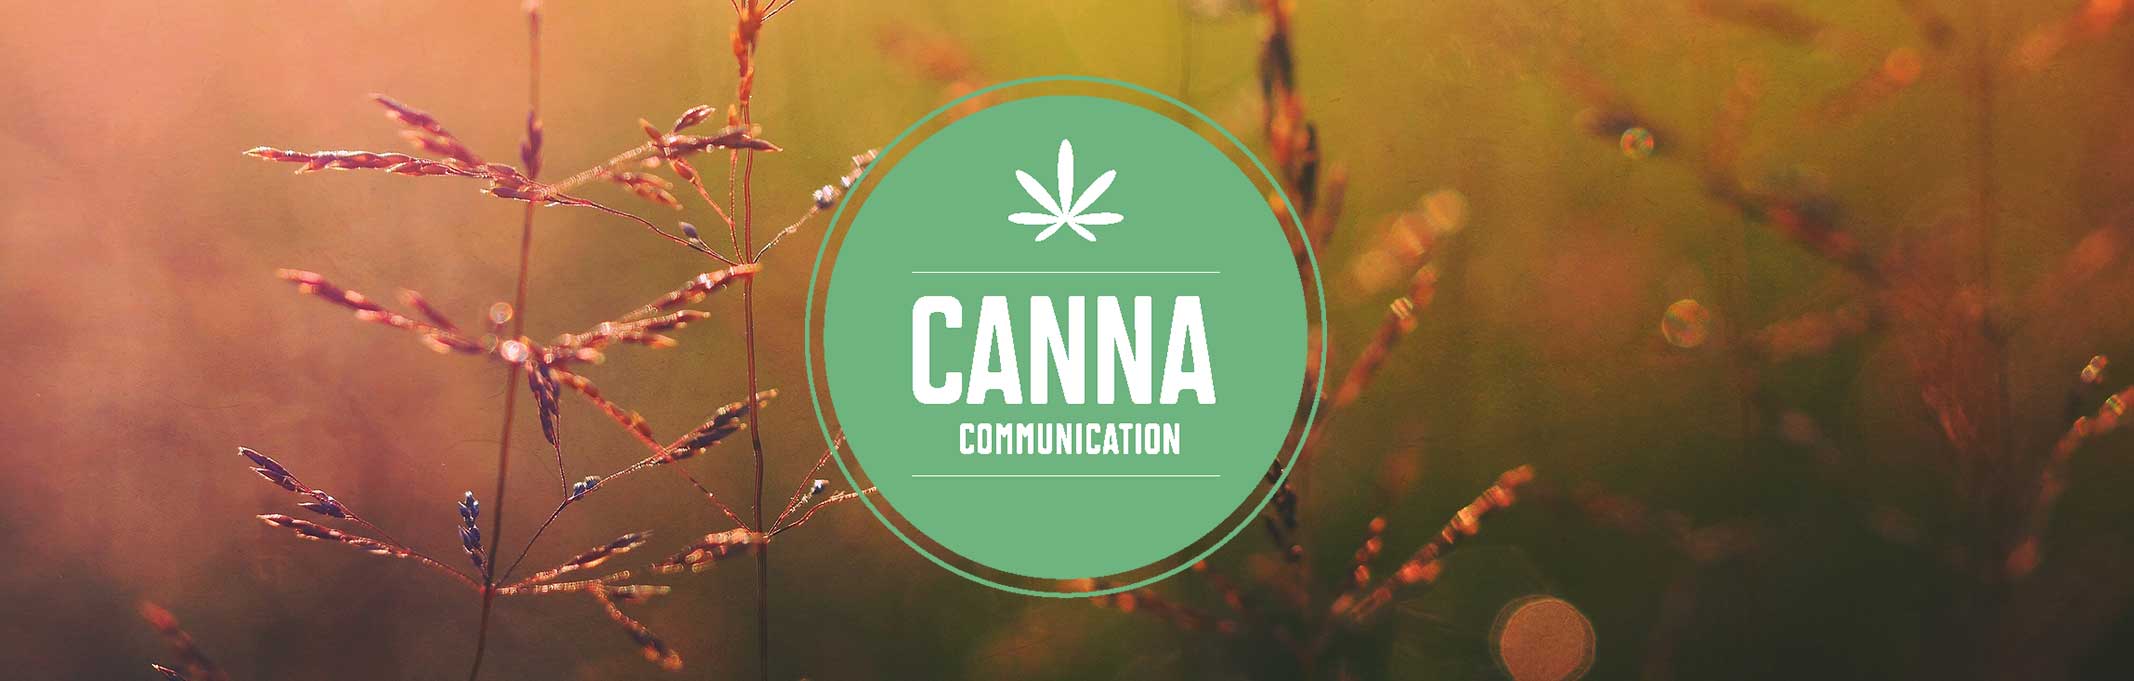 Canna Communication